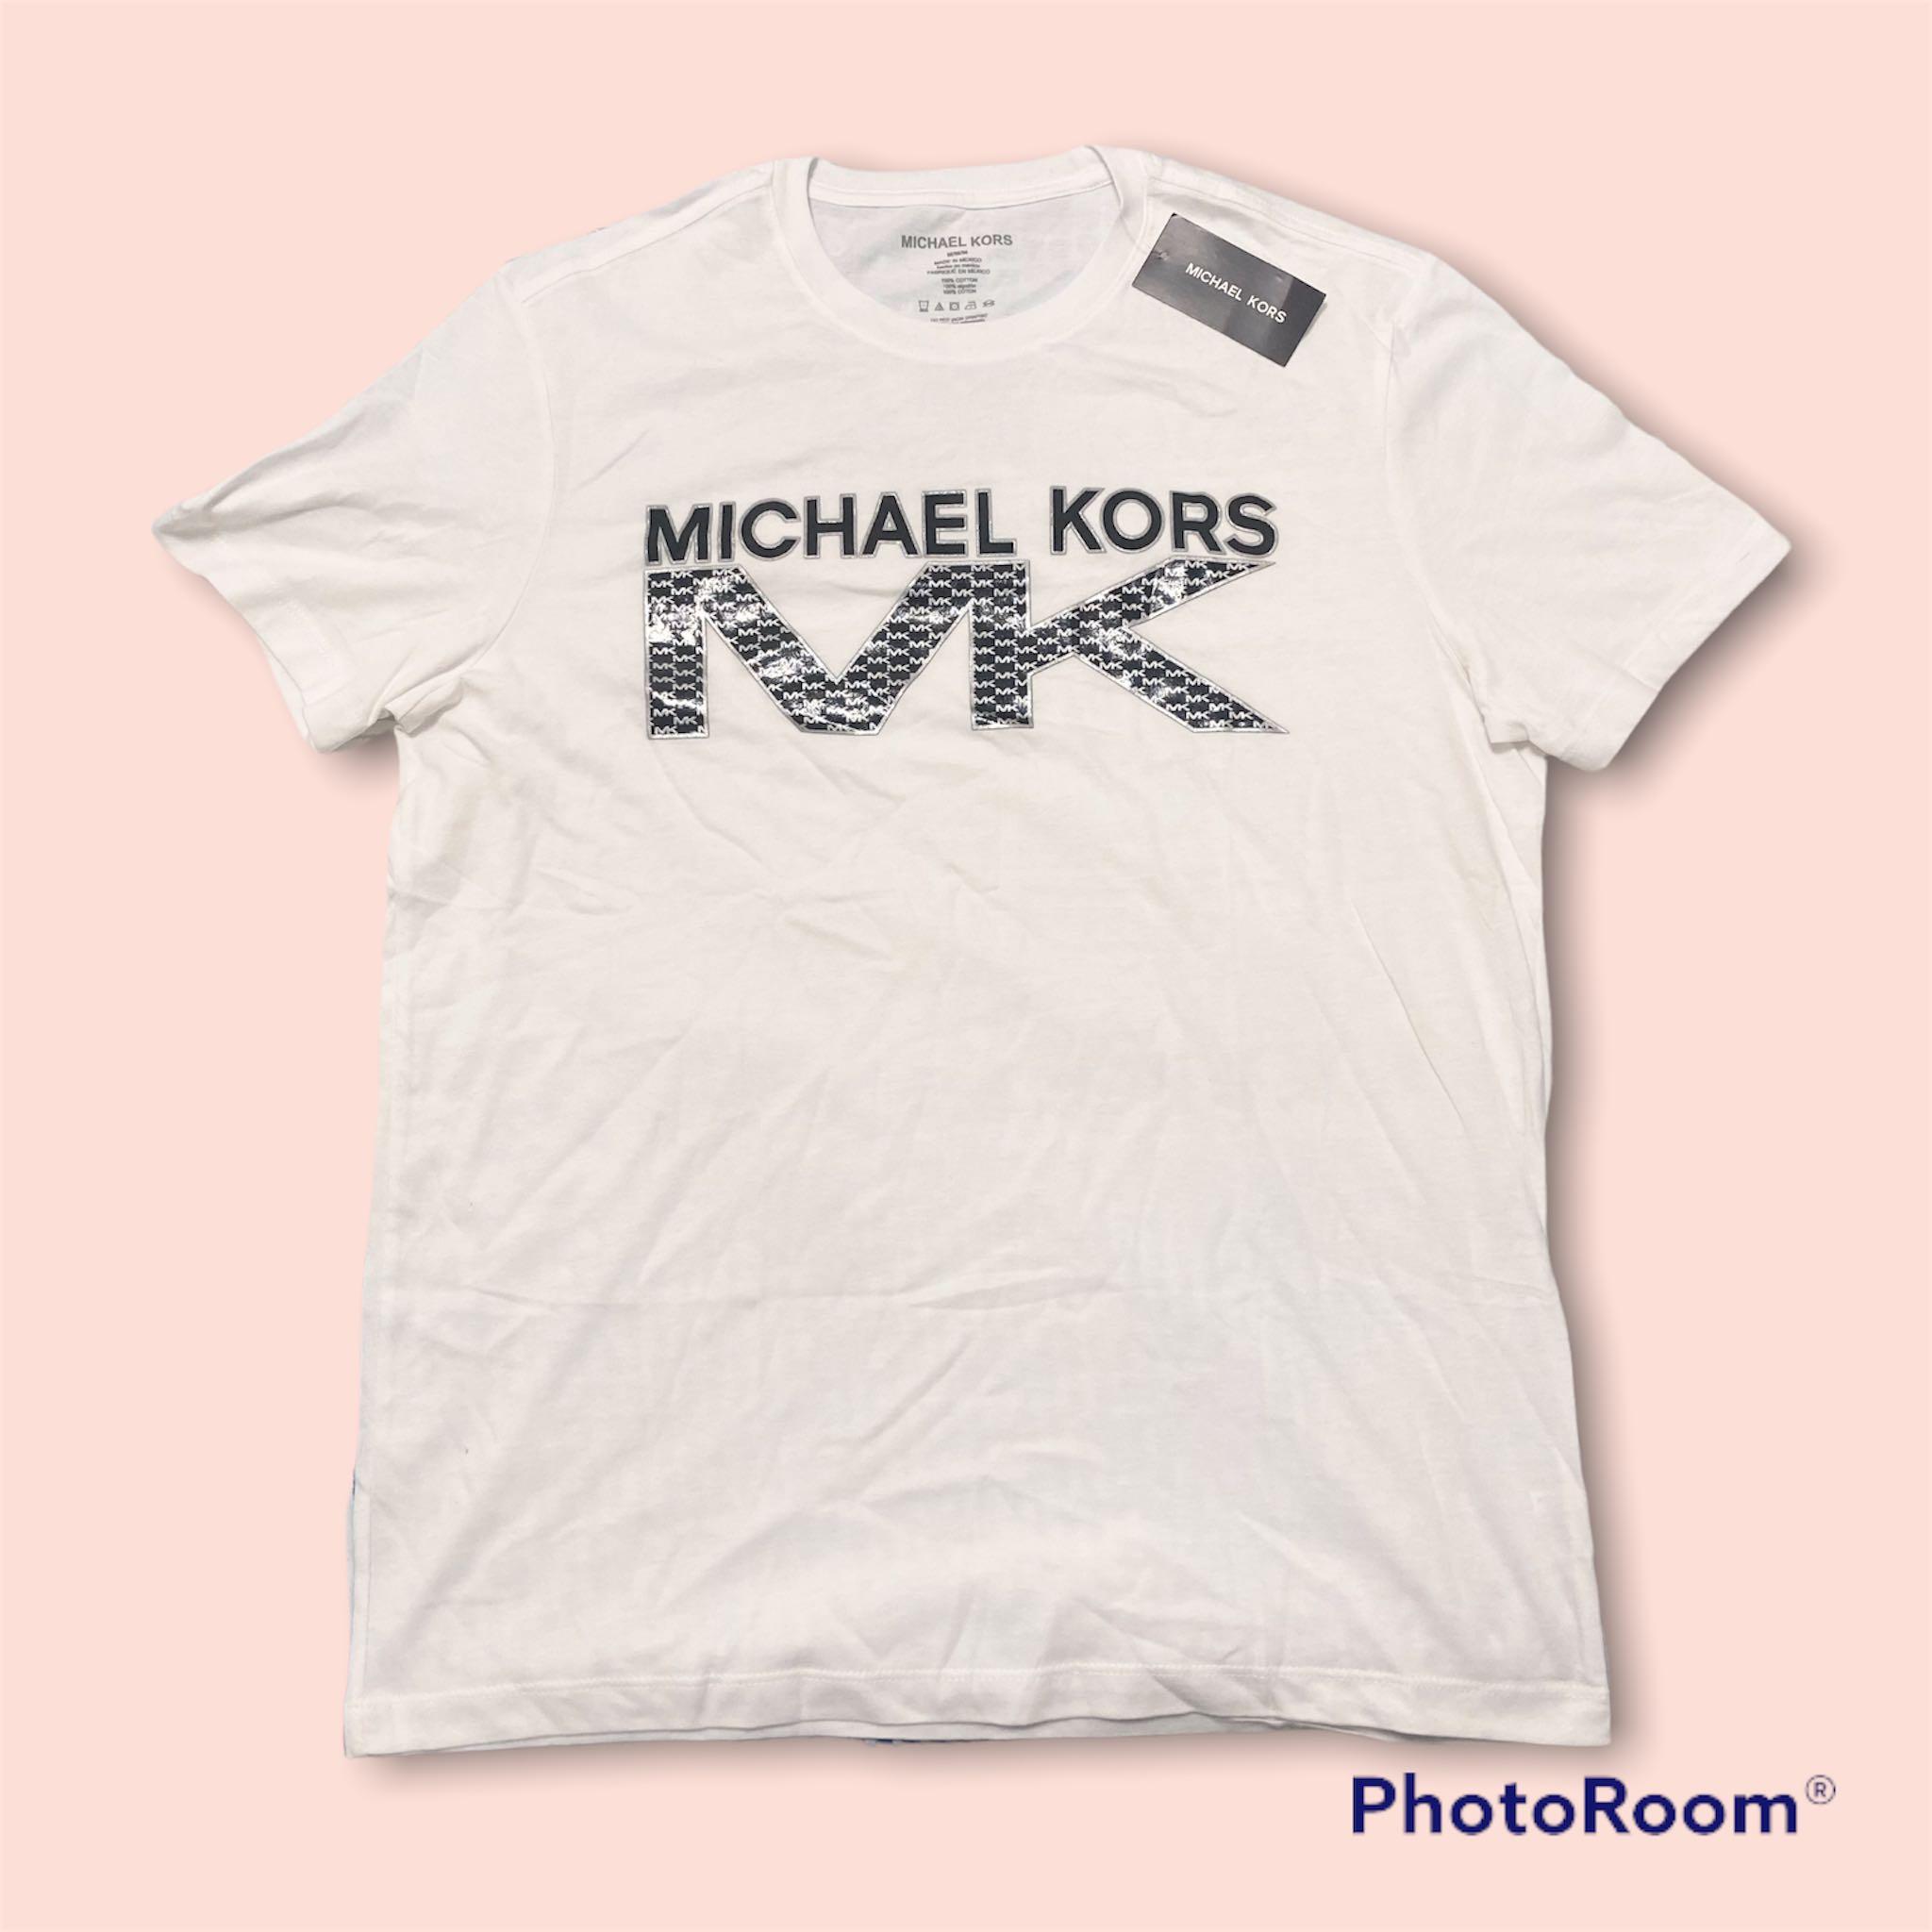 Michael Kors Men039s Performance White 100 Cotton 3Pack Small VNecks T  Shirts  eBay